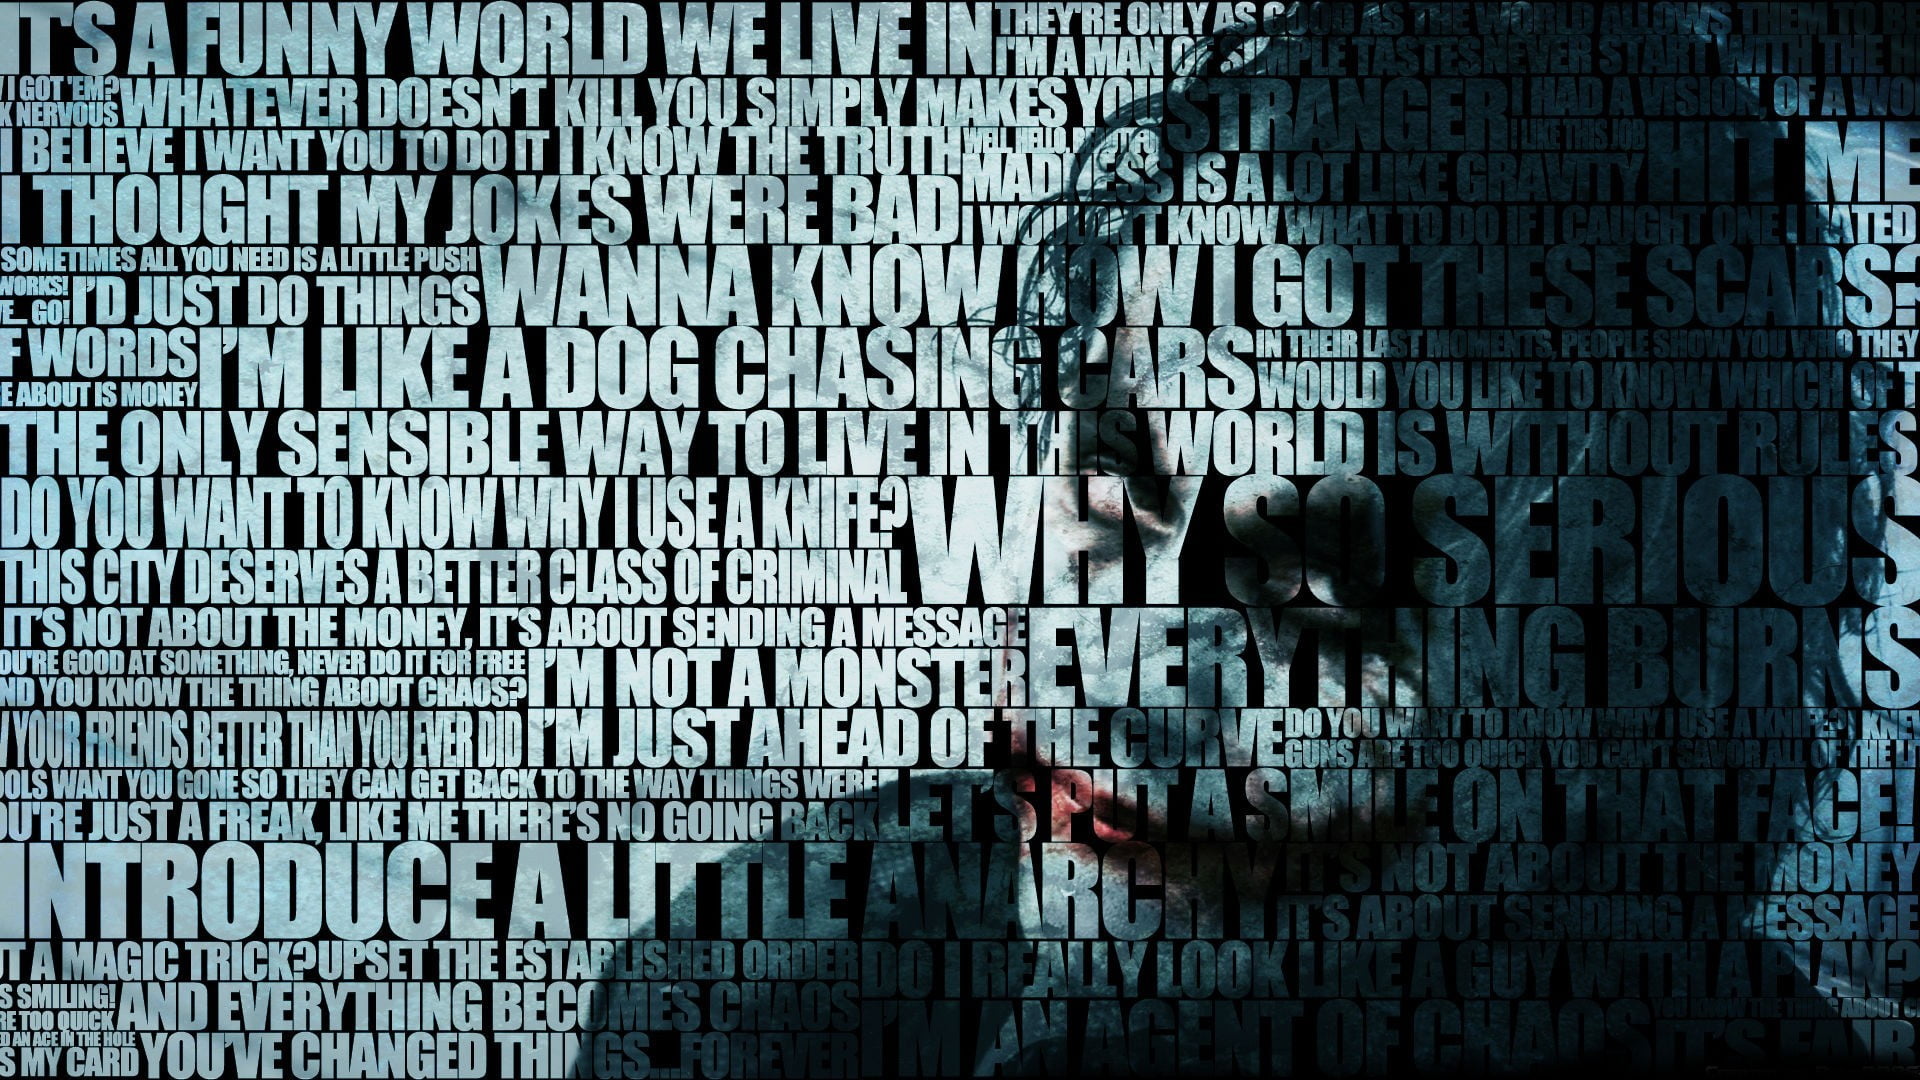 Batman Joker poster, The Dark Knight, Heath Ledger, movies, quote